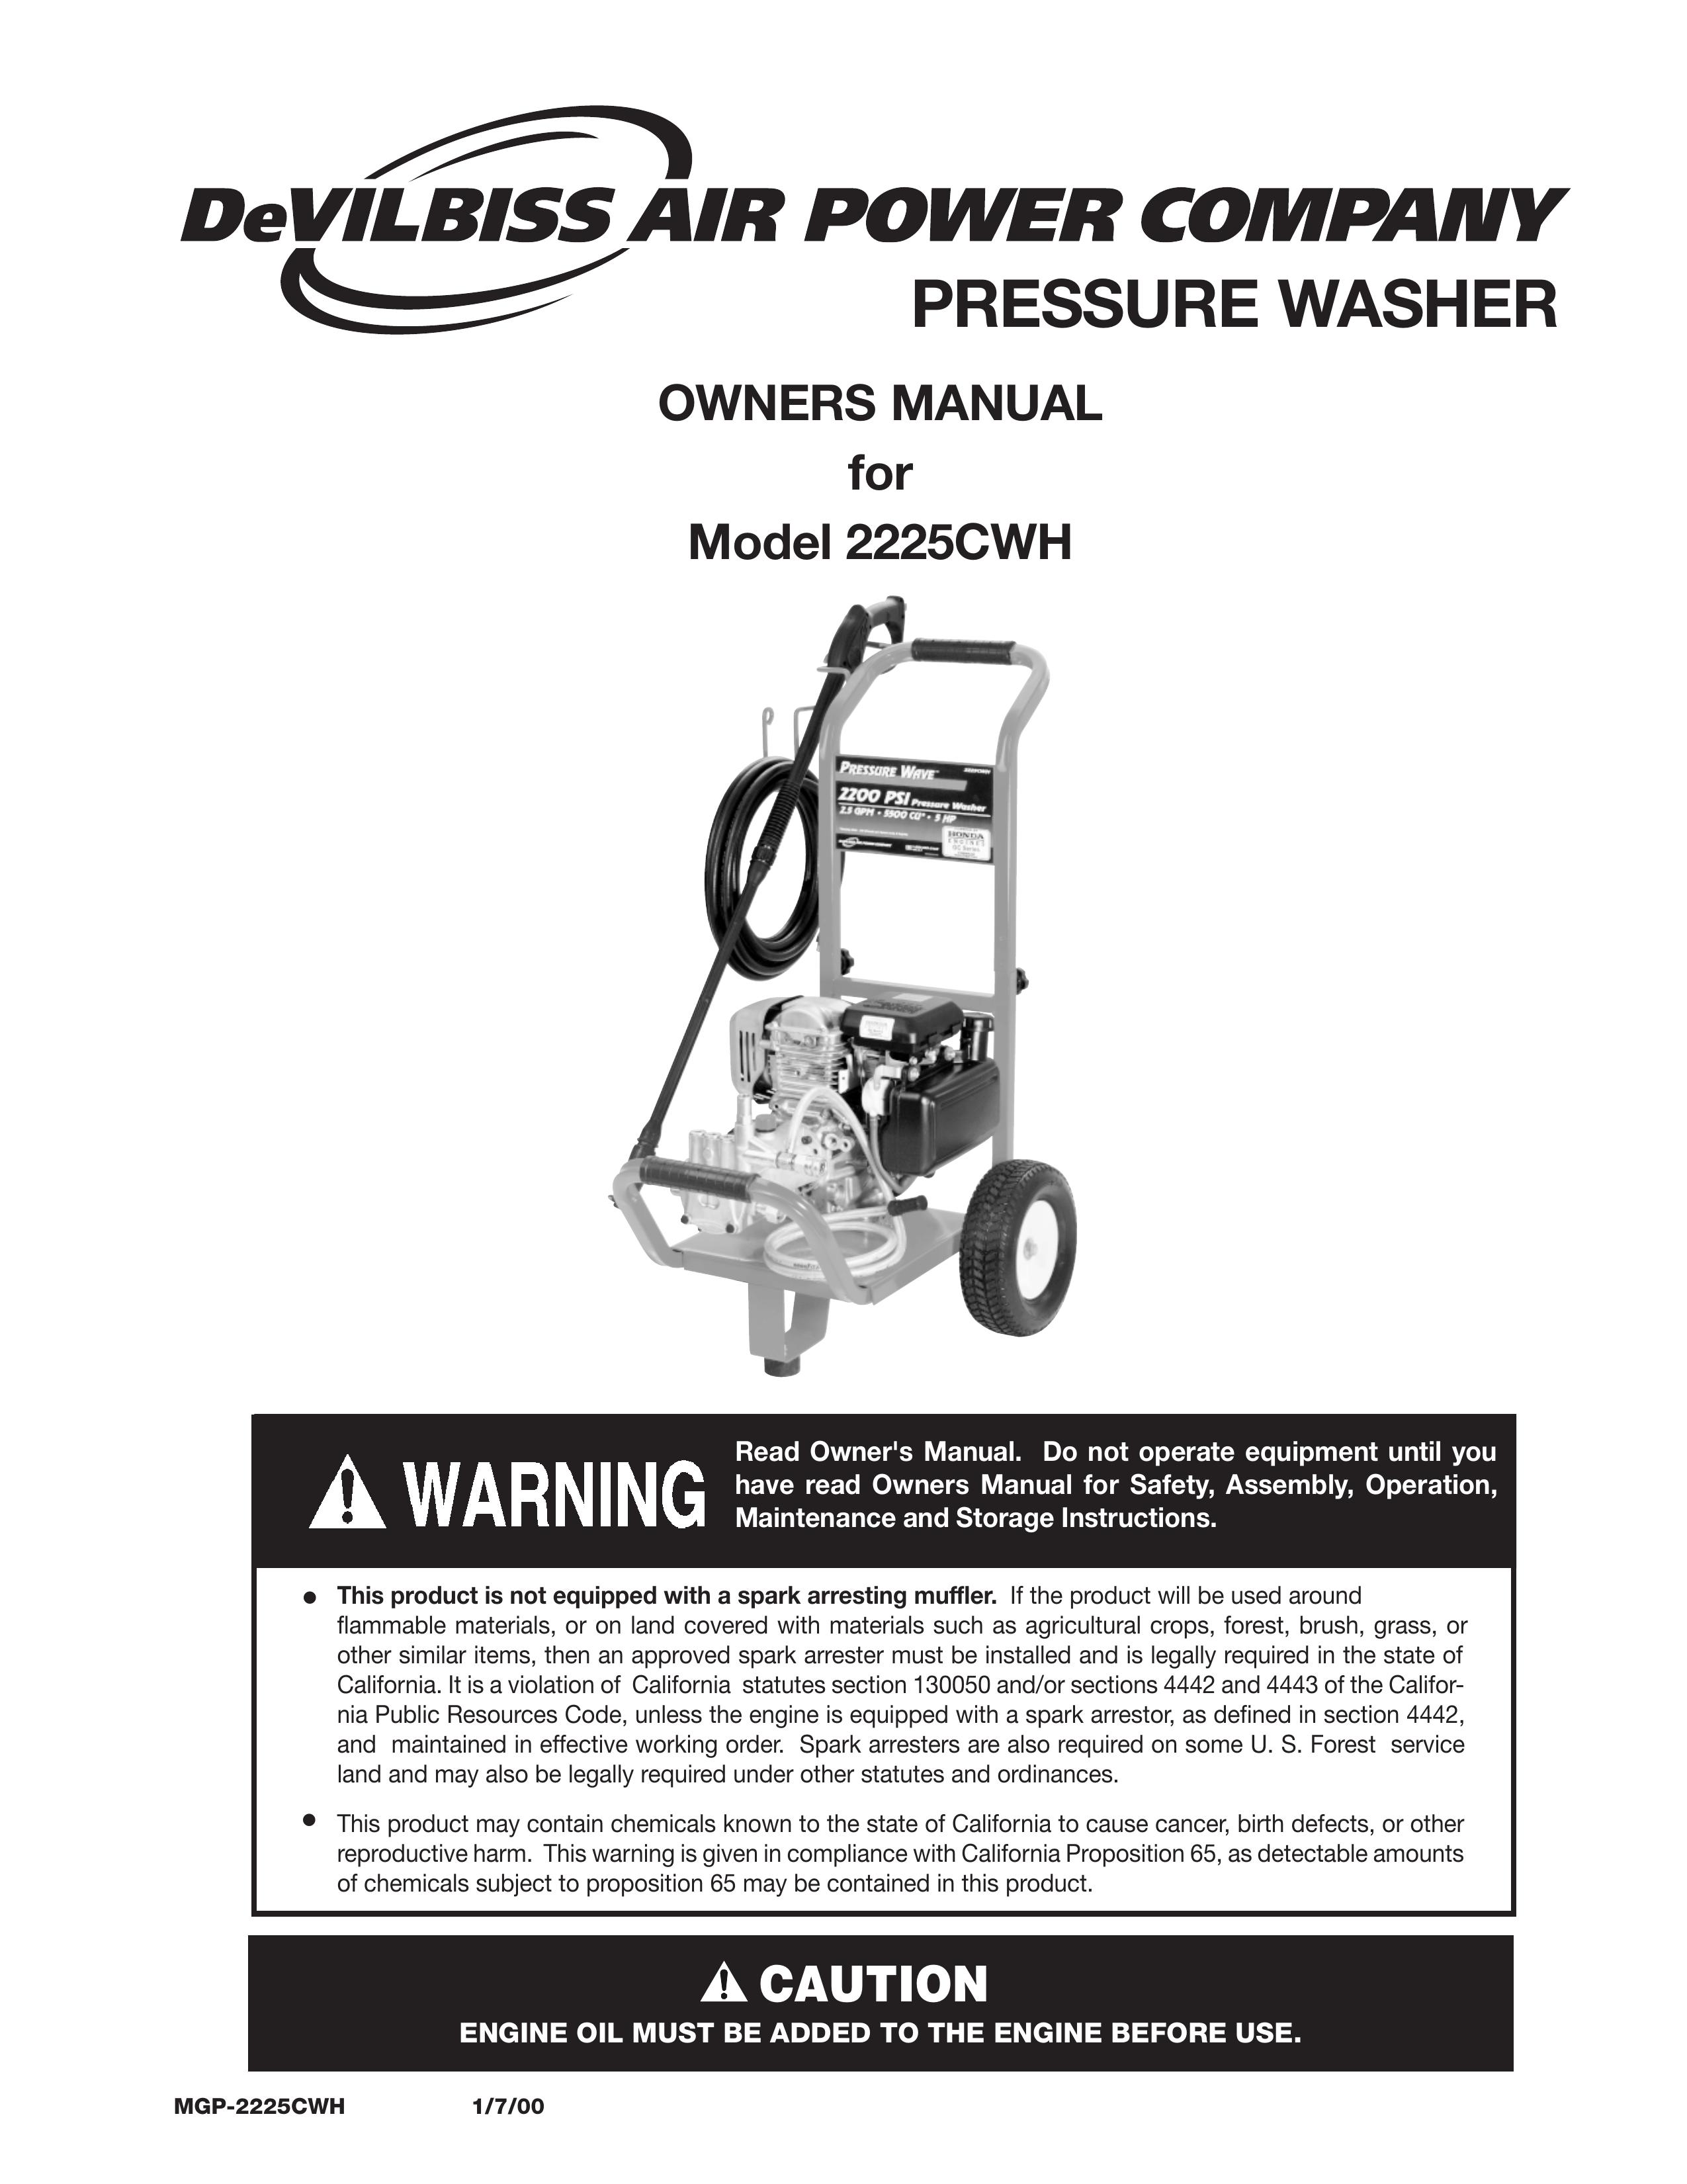 DeVillbiss Air Power Company MGP-2225CWH Pressure Washer User Manual